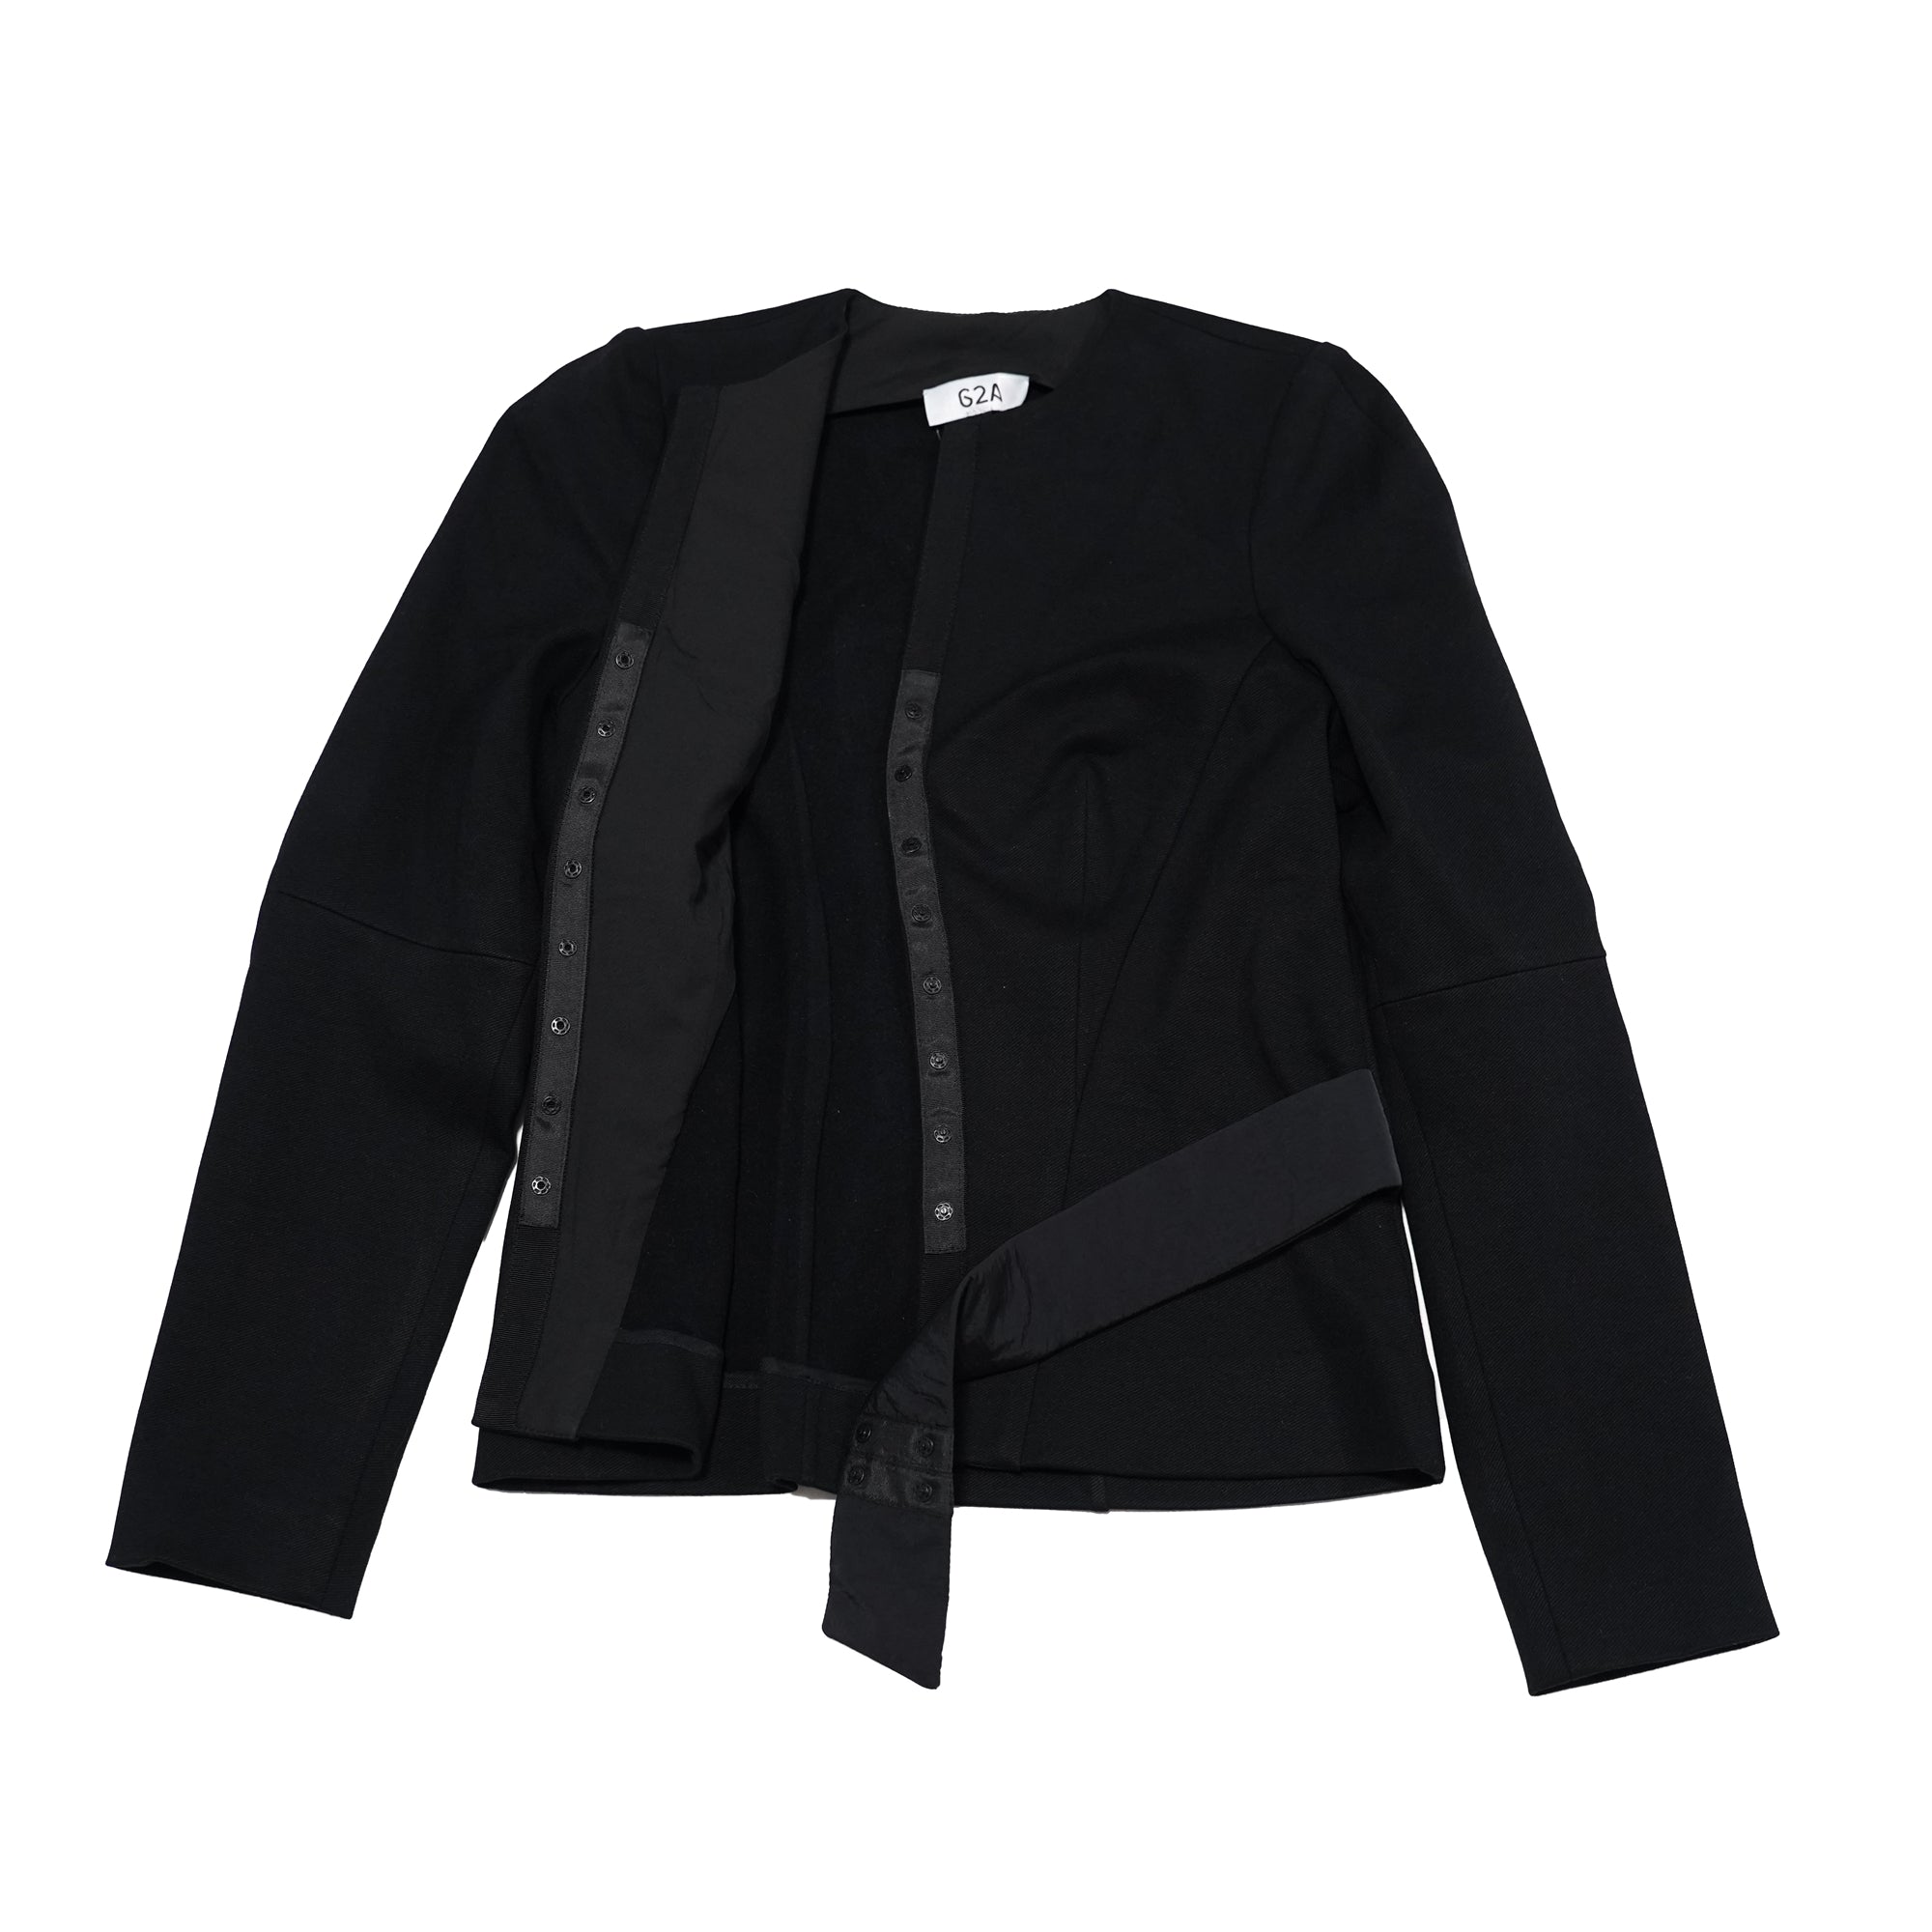 No:GA1-2921 | Name:Jacket With Cast Belt | Color:Black | Size:S/M【G2A】-G2A-ADDICTION FUKUOKA